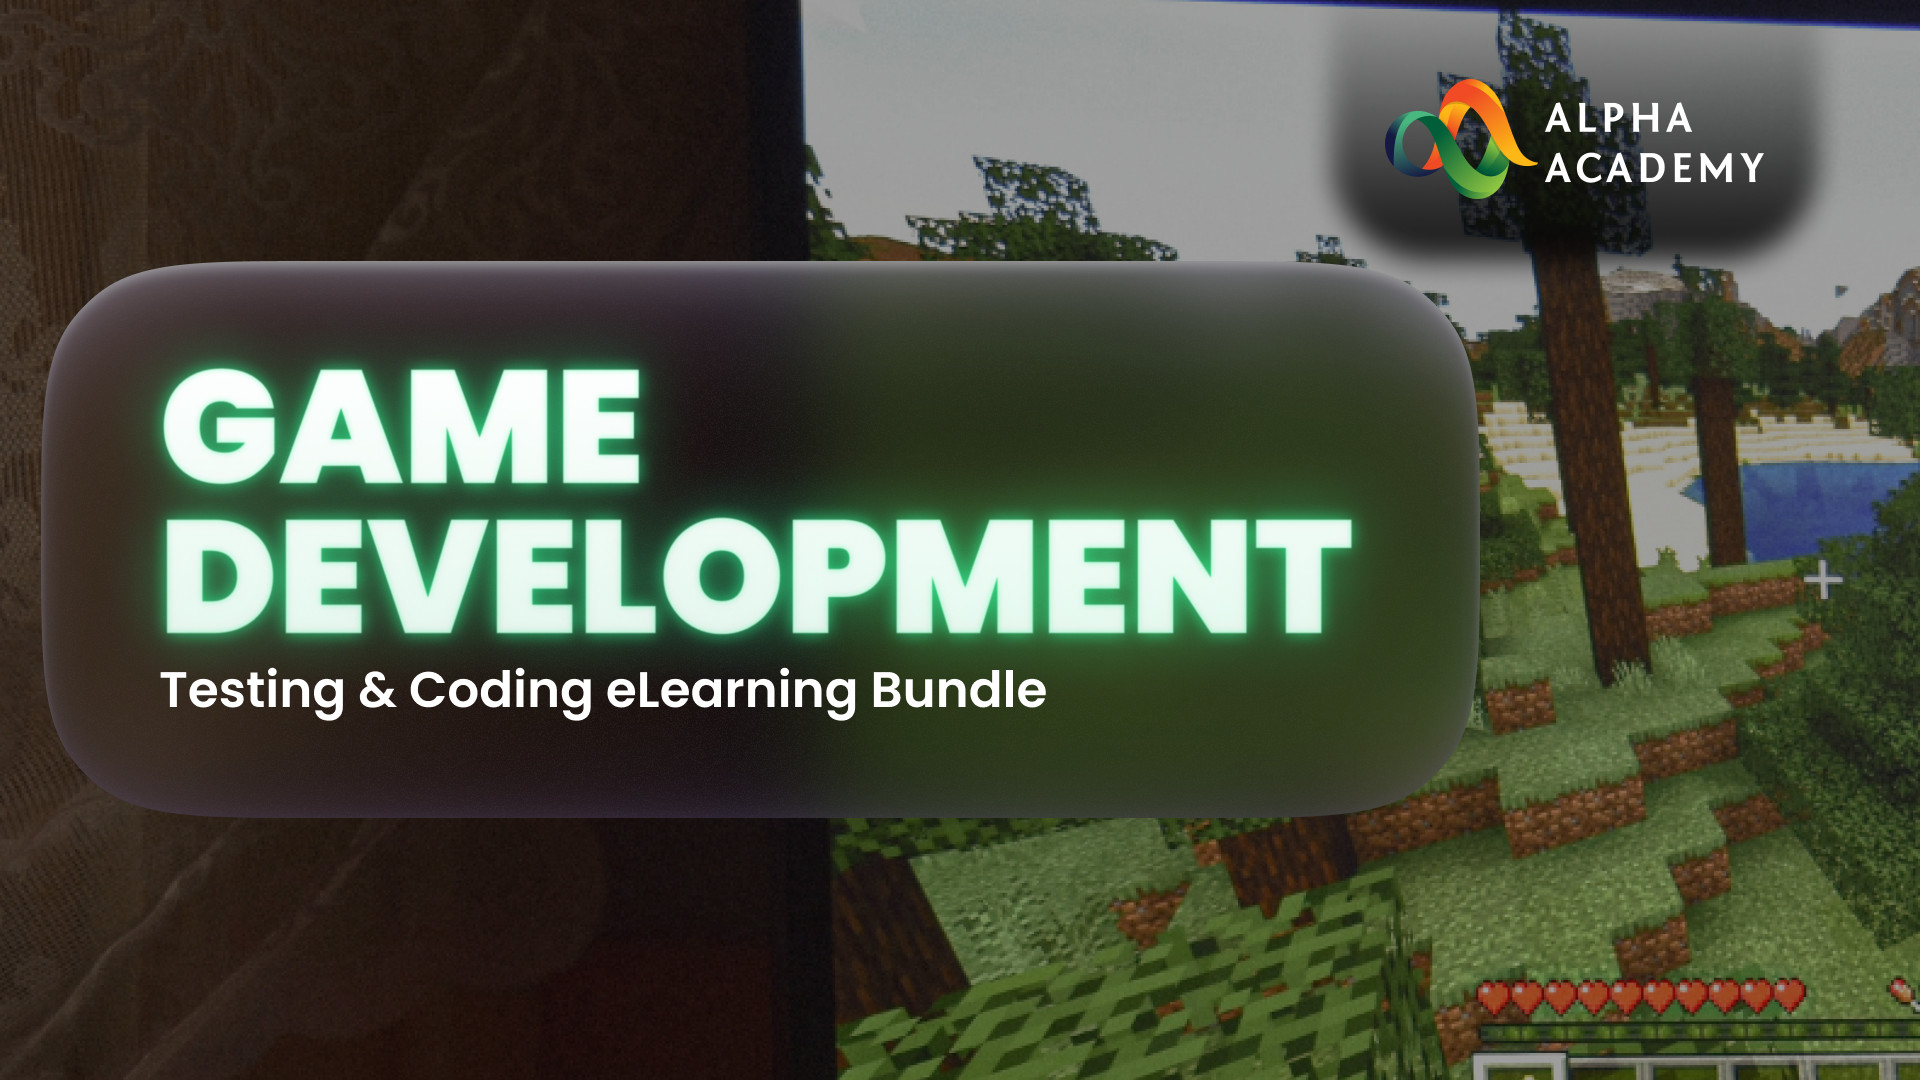 (10.19$) Game Development, Testing & Coding eLearning Bundle Alpha Academy Code